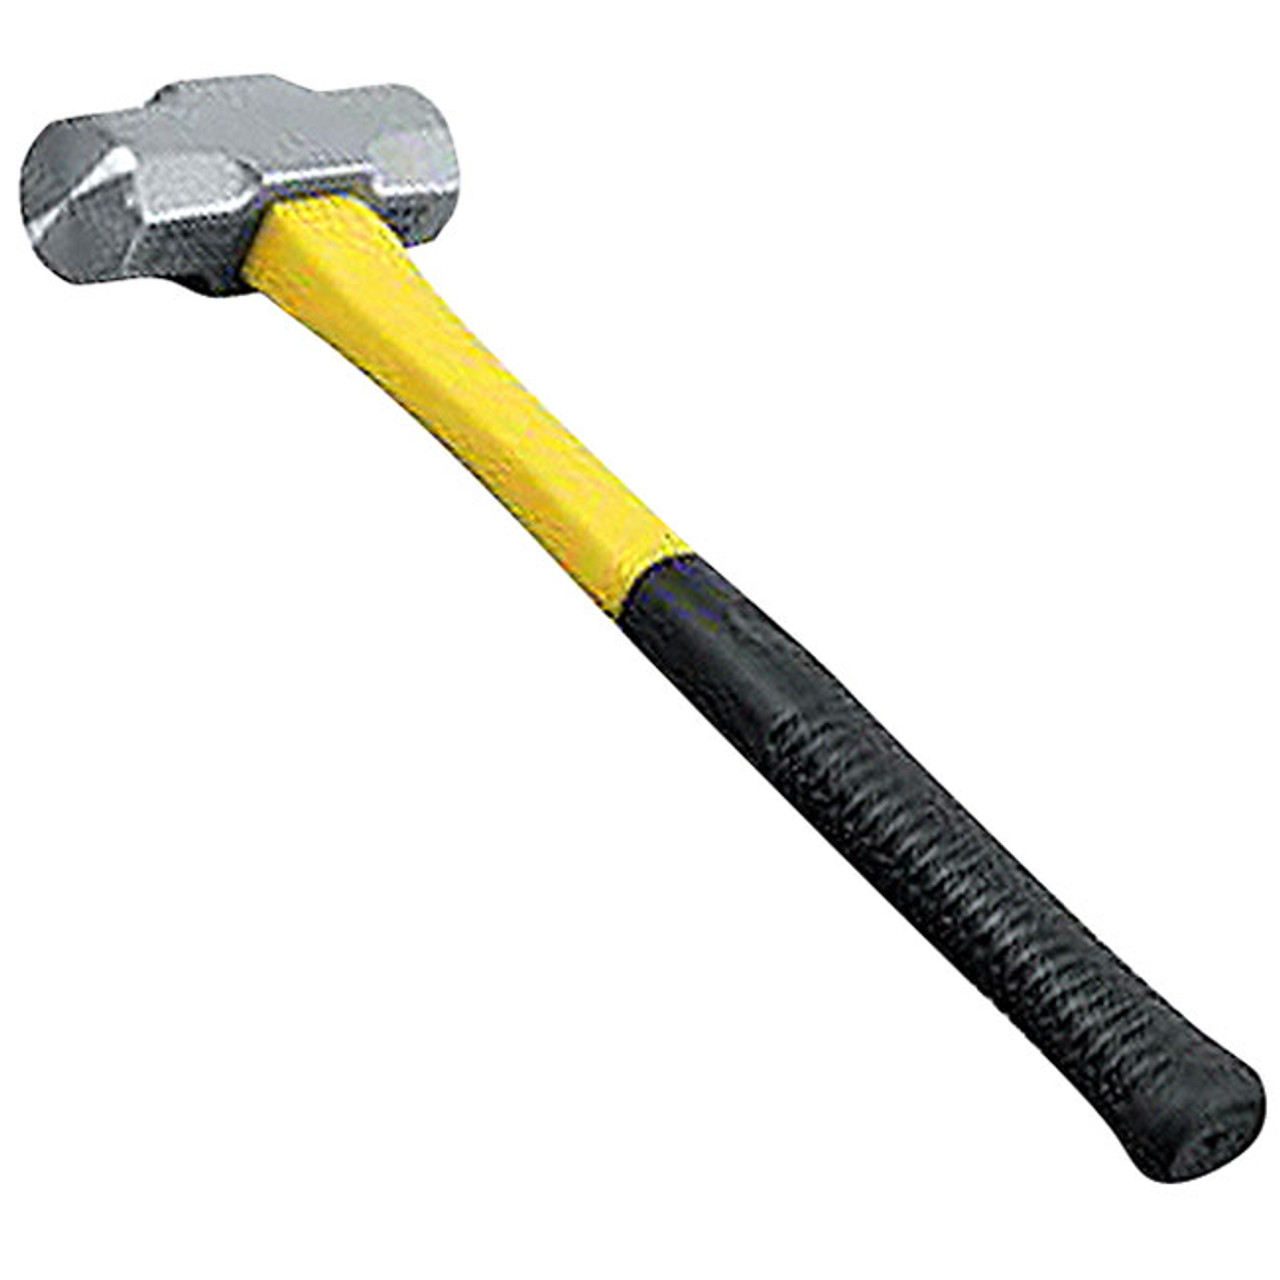 Hammer with Fiberglass Handle